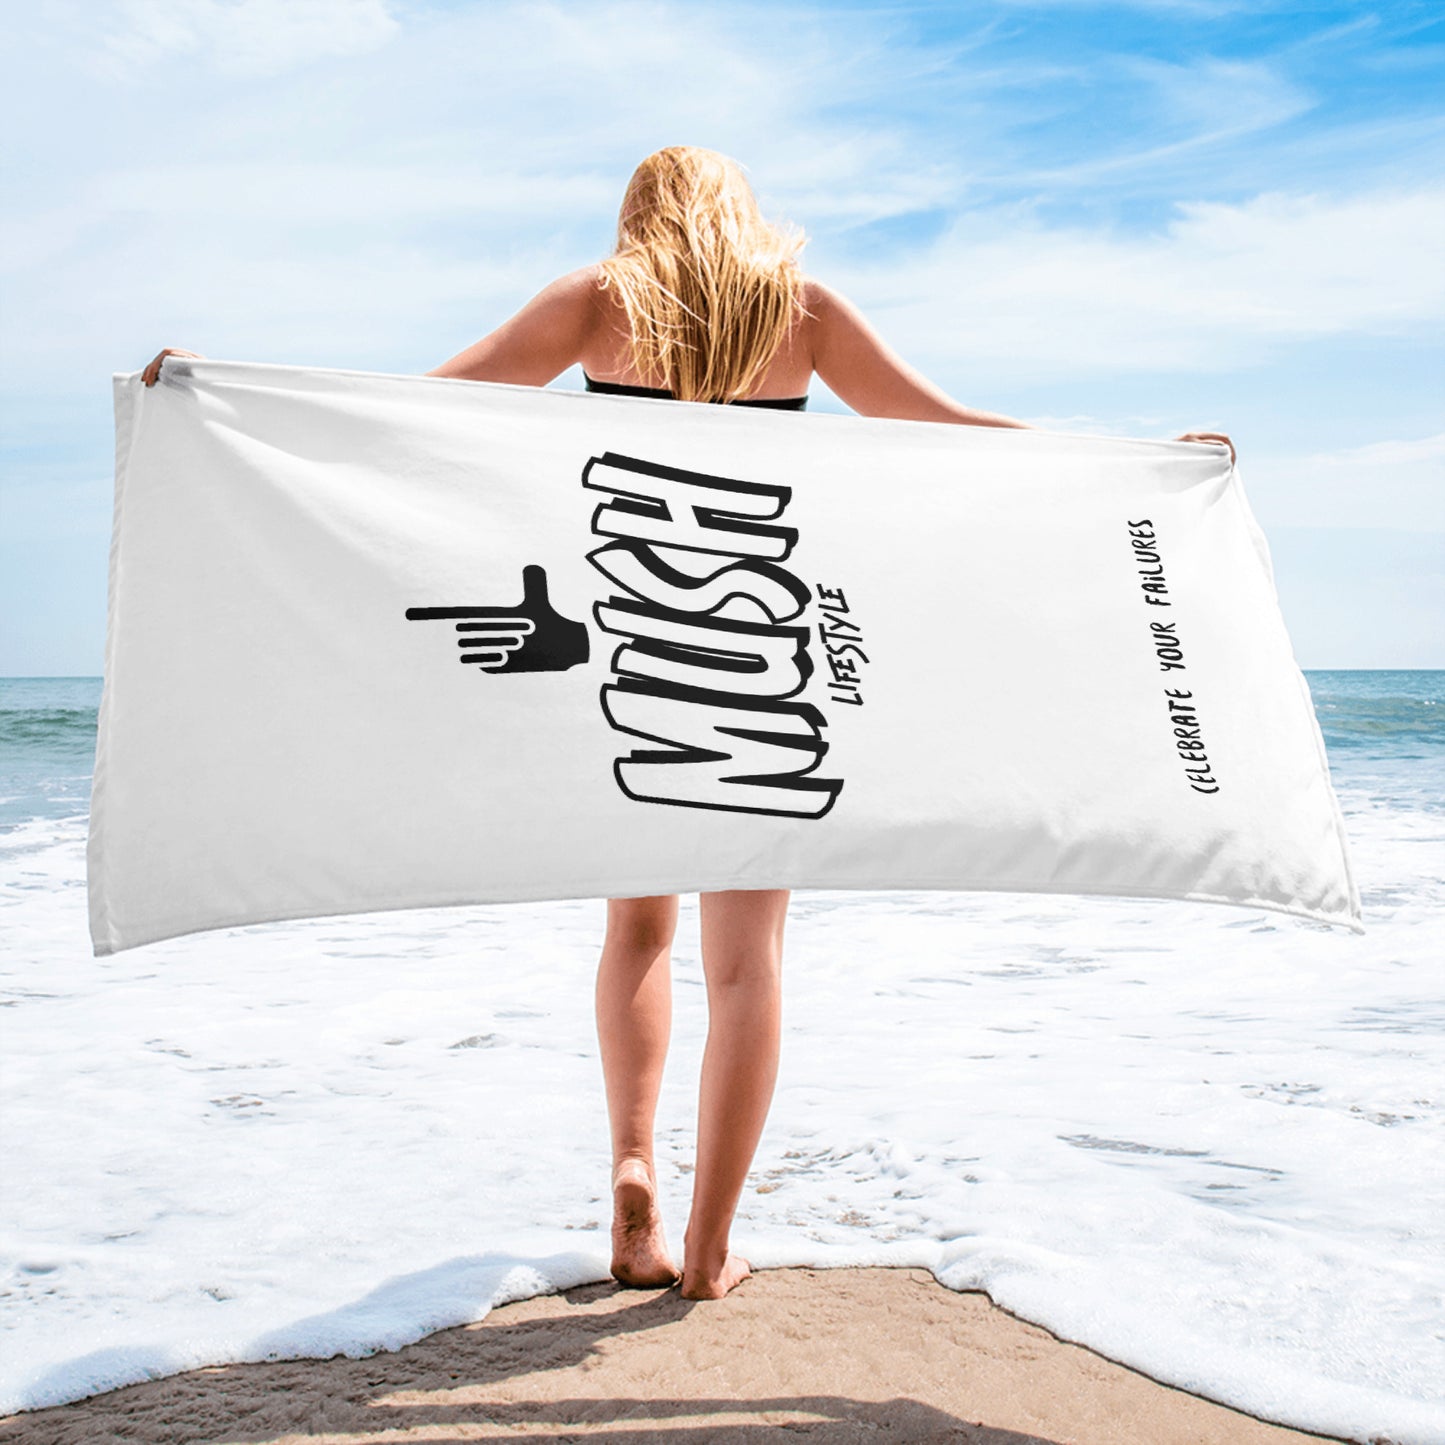 MUSH Celebrate Your Failures Beach or Pool Towel